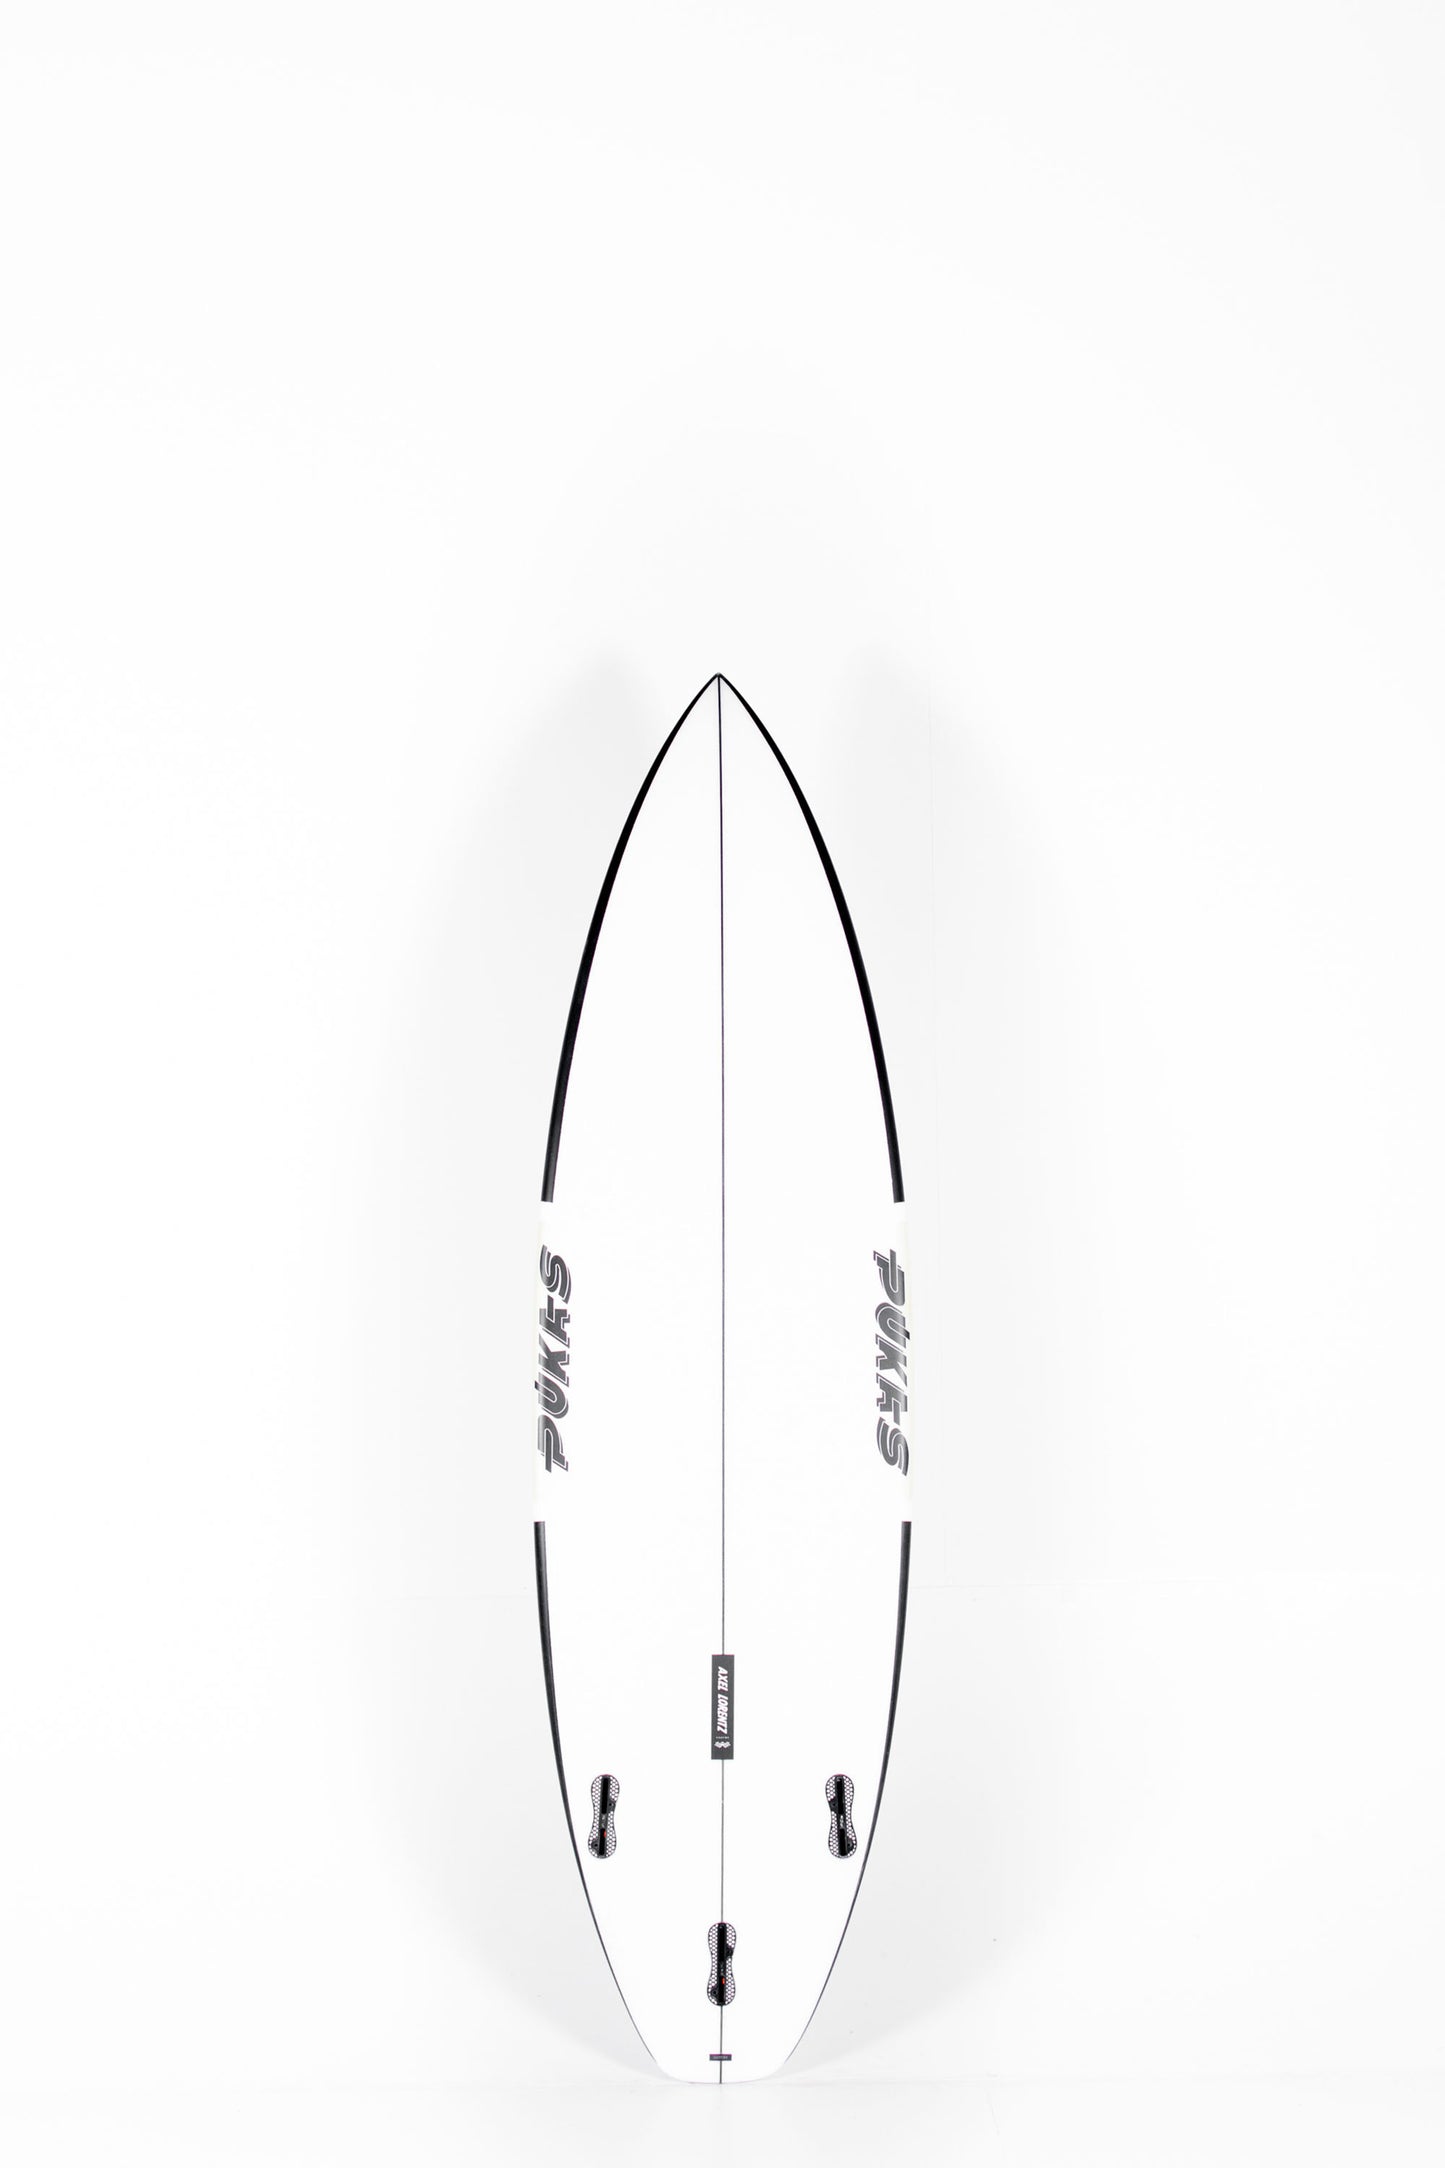 Pukas Surf shop - Pukas Surfboard - DARKER by Axel Lorentz - 6'2" x 19,75 x 2,44 x 31,6L. - AX06231